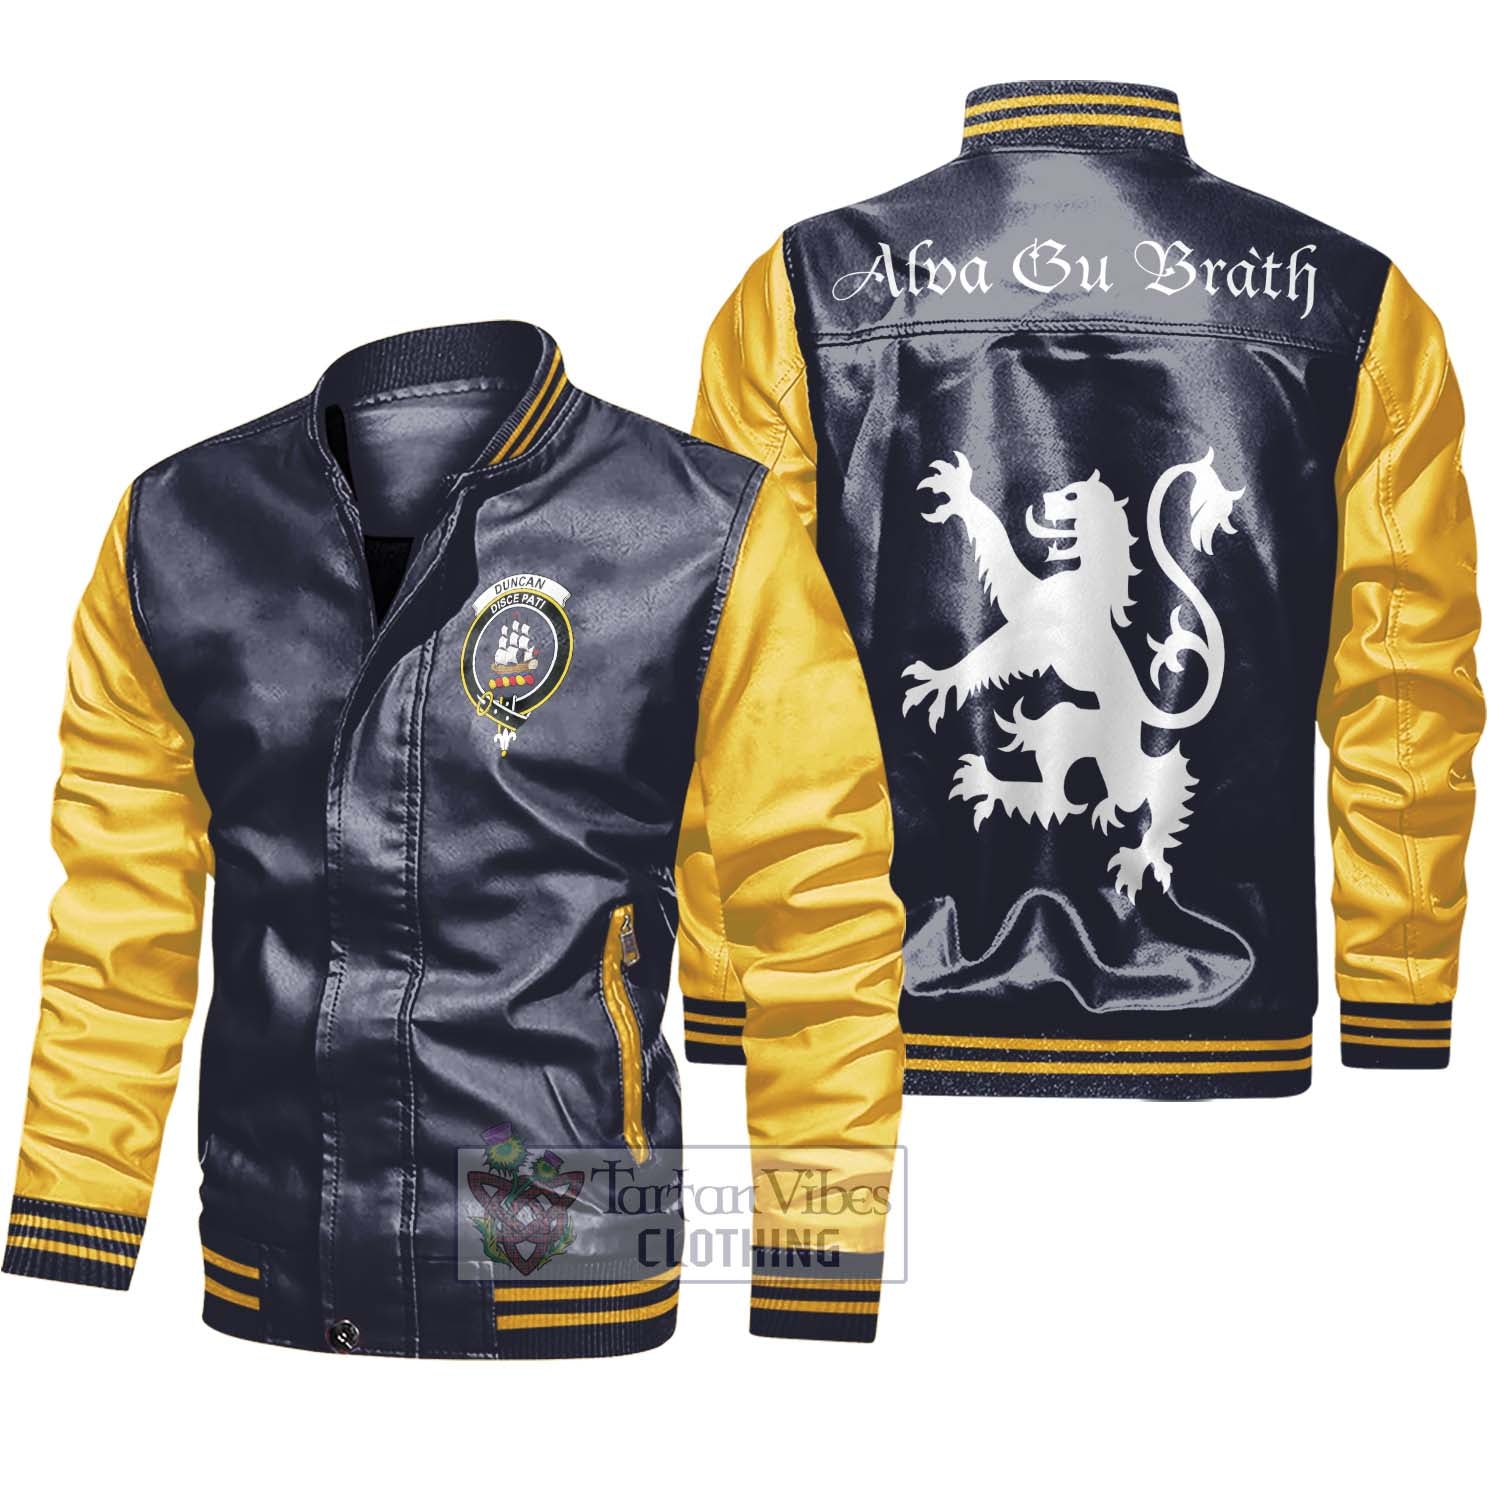 Tartan Vibes Clothing Duncan Family Crest Leather Bomber Jacket Lion Rampant Alba Gu Brath Style